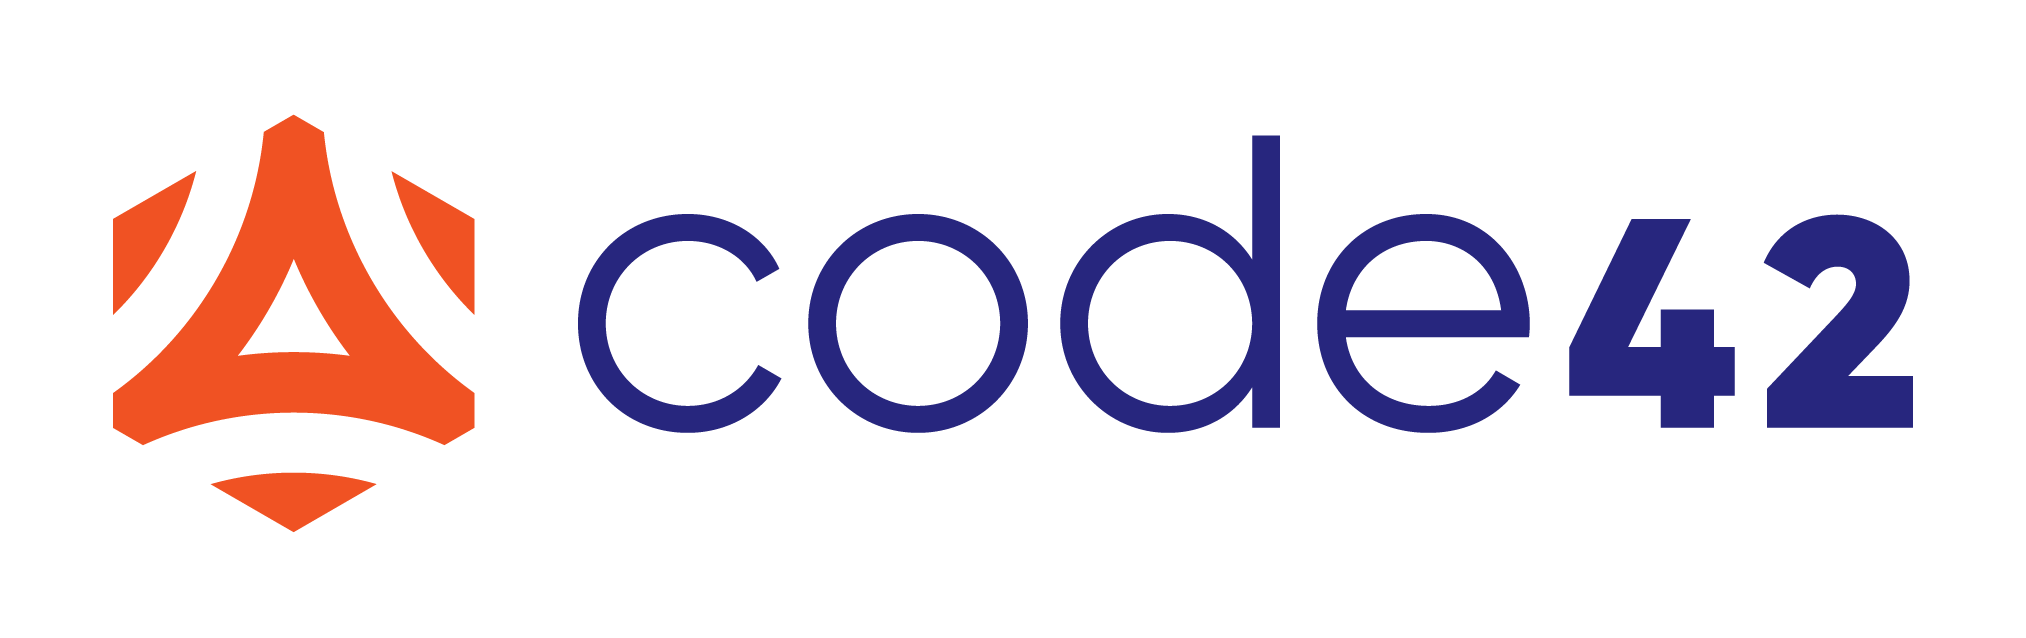 Code42-Company-Logo.png